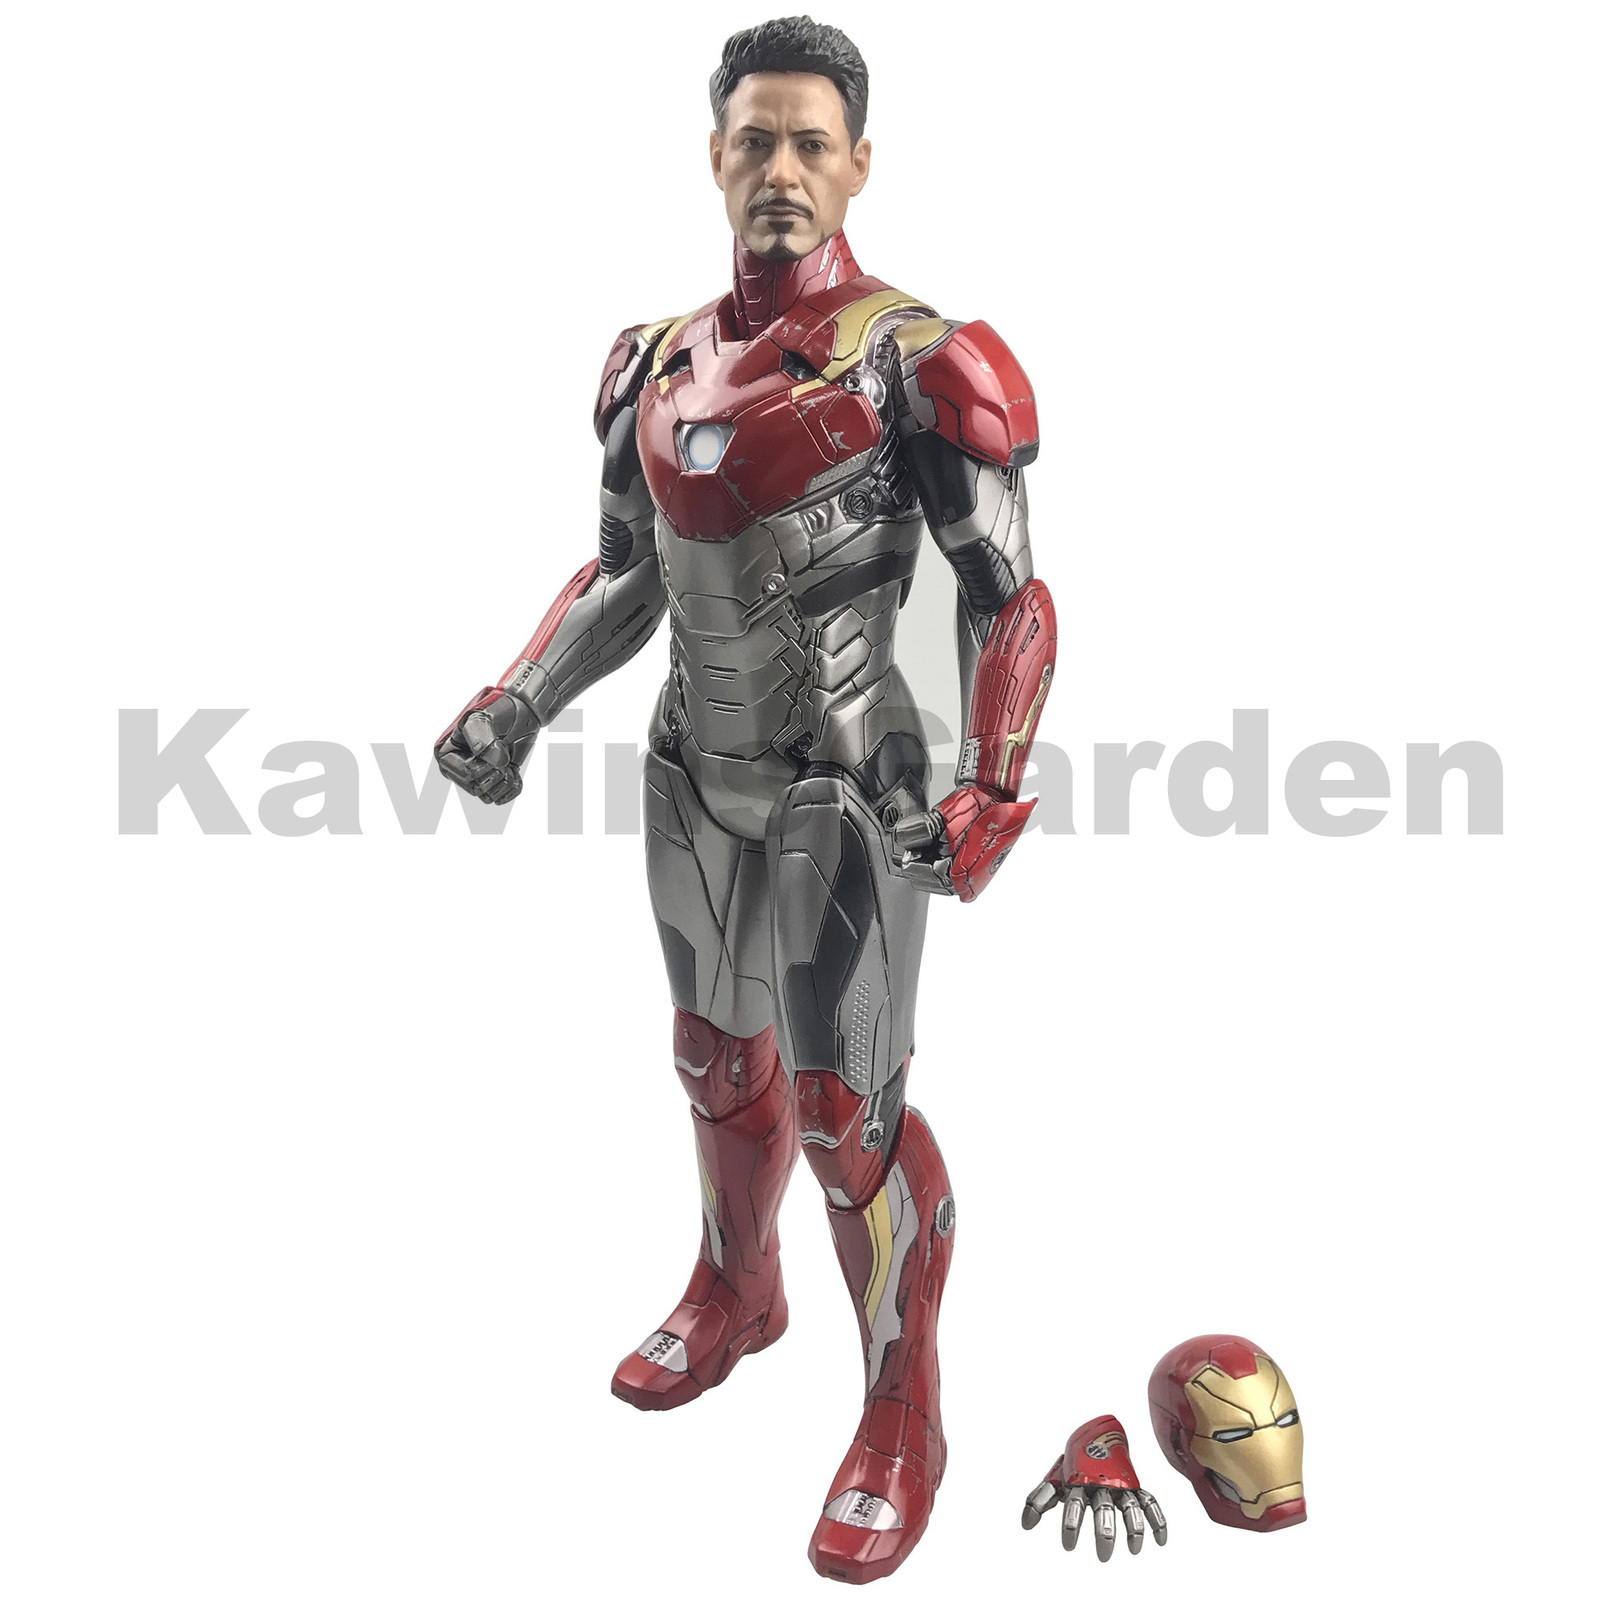 Crazy Toy 1:6 Iron Man MK 47 Statue Figure 12 Inch Avengers Ironman Tony Stark - $69.99